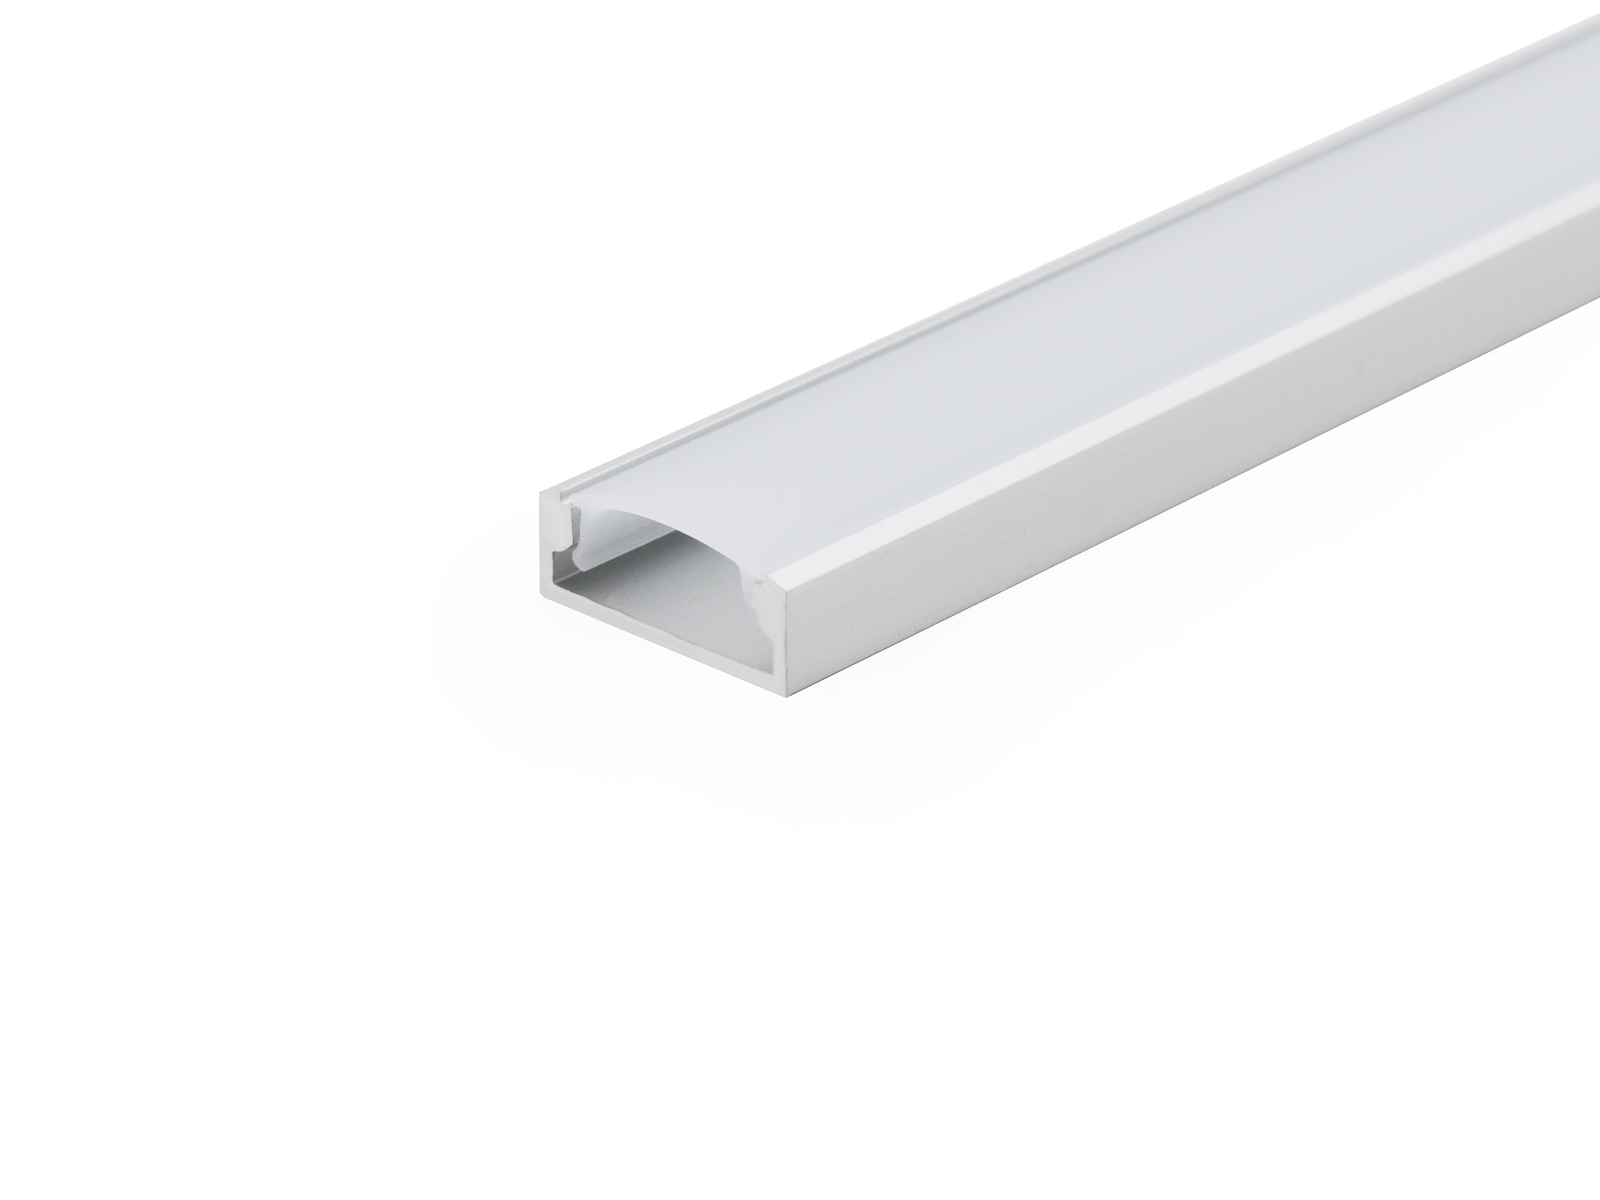 LED Alu U-Profil Slim XL 8mm silber mit Abdeckung 2m kaufen | PUR-LED